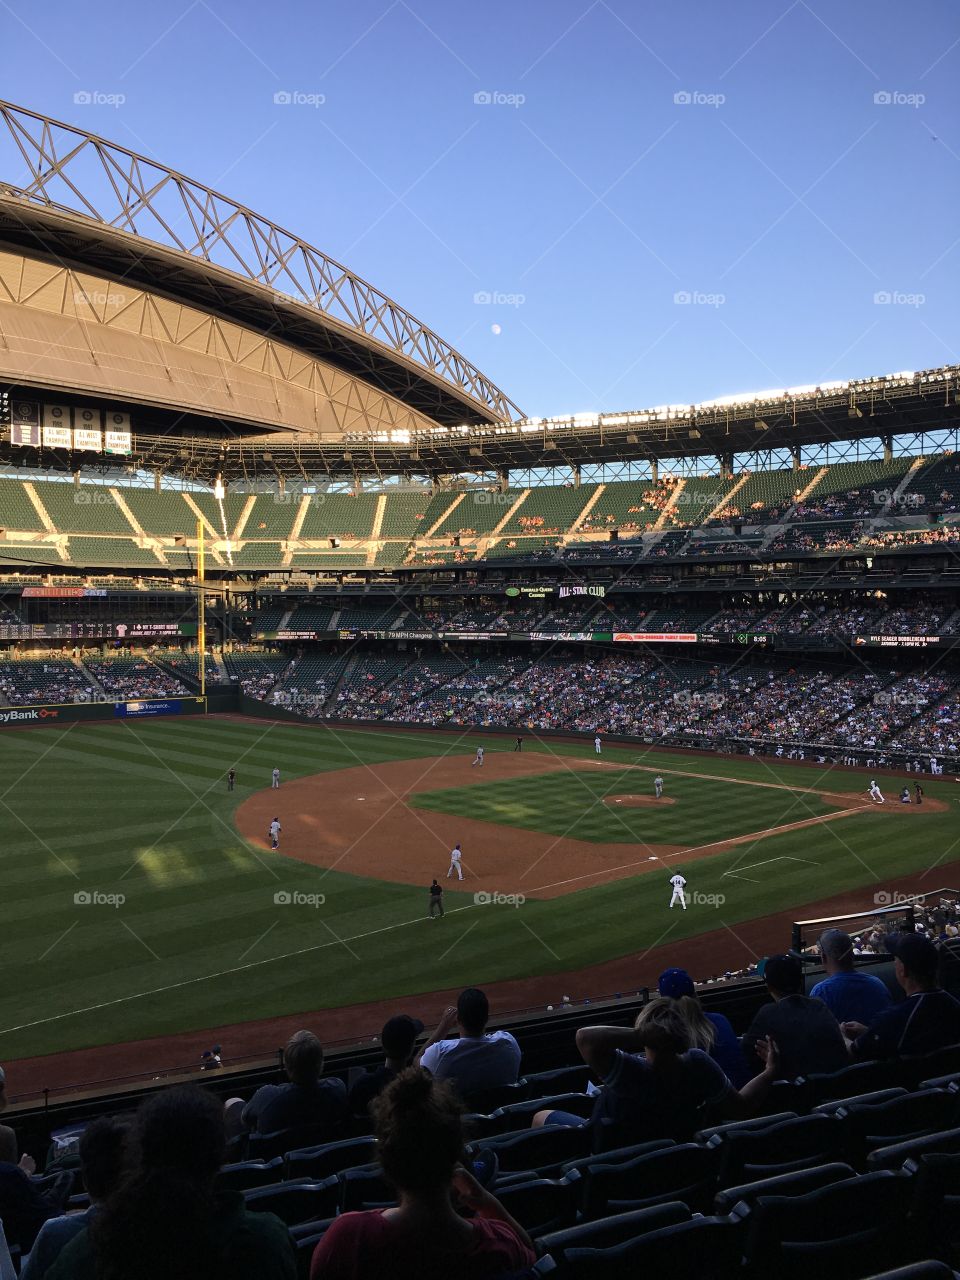 Good ole Mariners baseball game in Seattle.